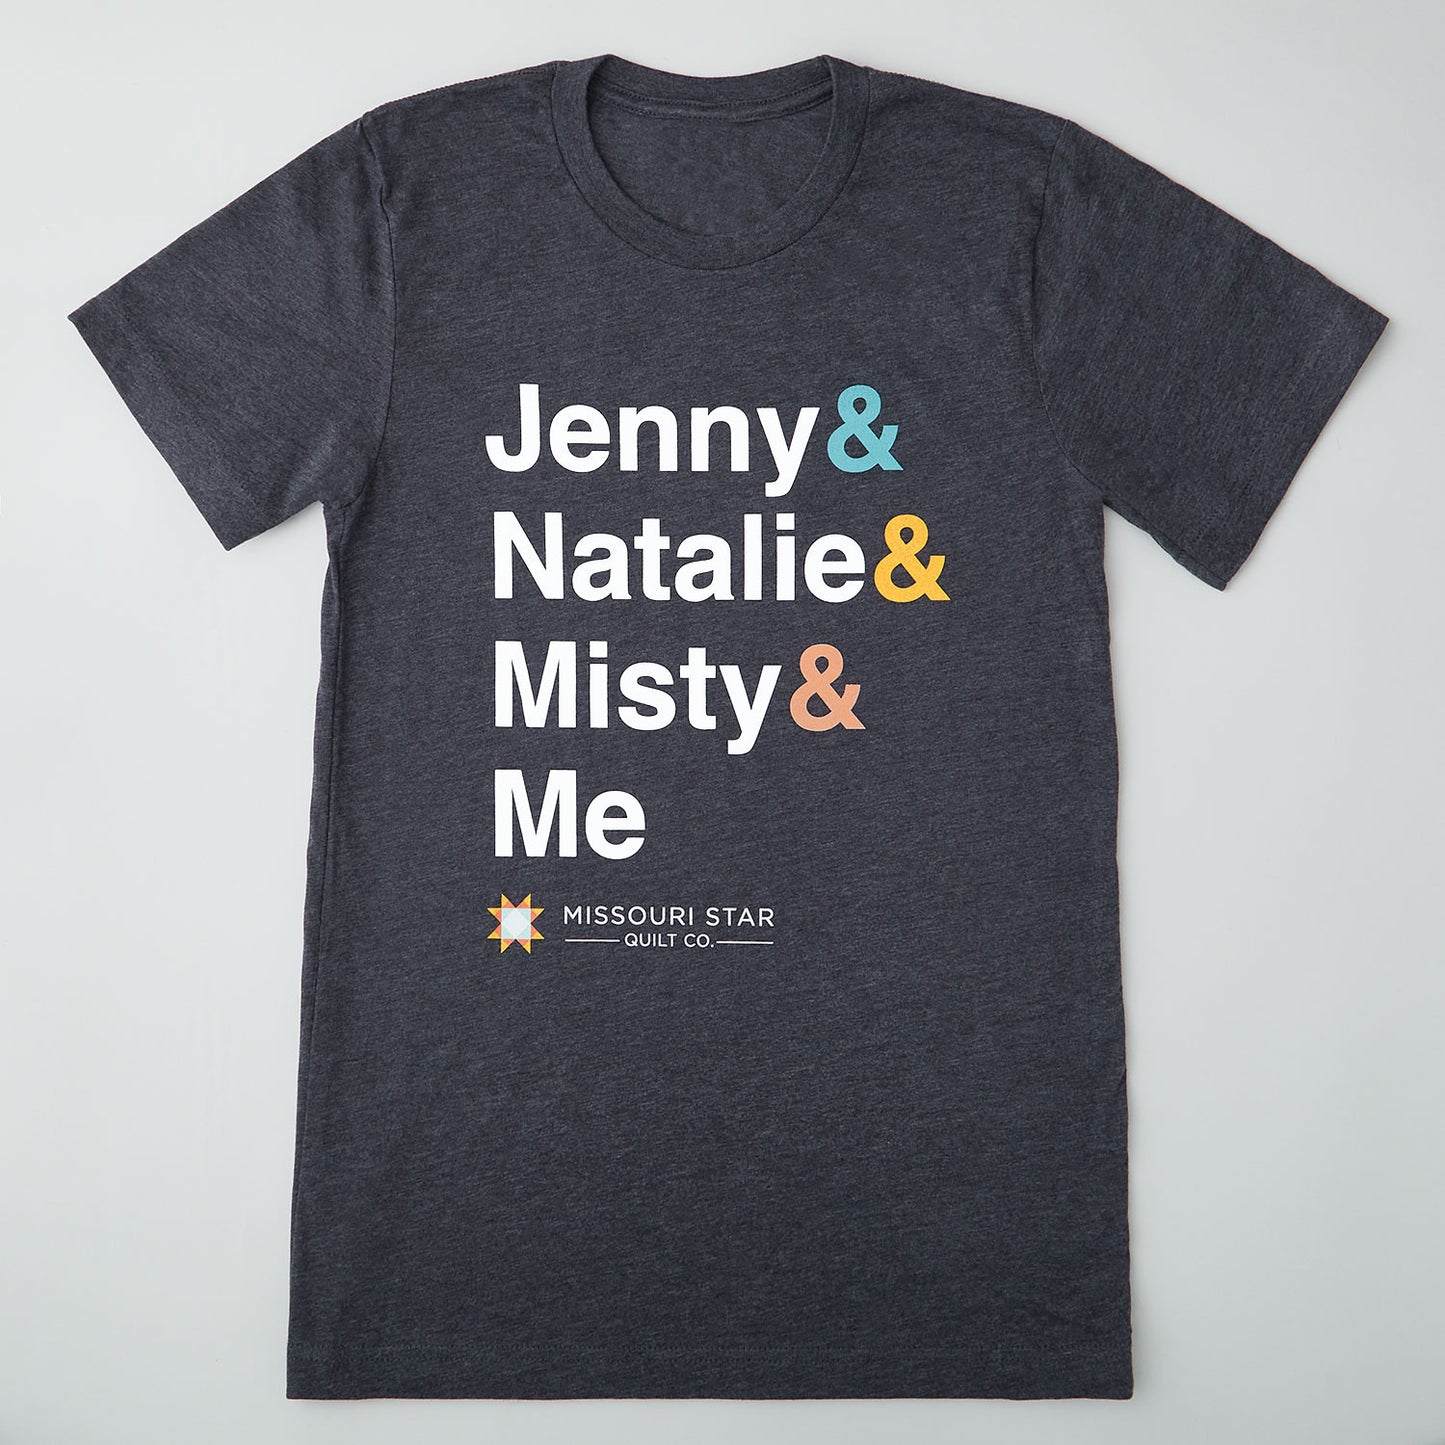 Jenny & Natalie & Misty & Me T-shirt - M Primary Image